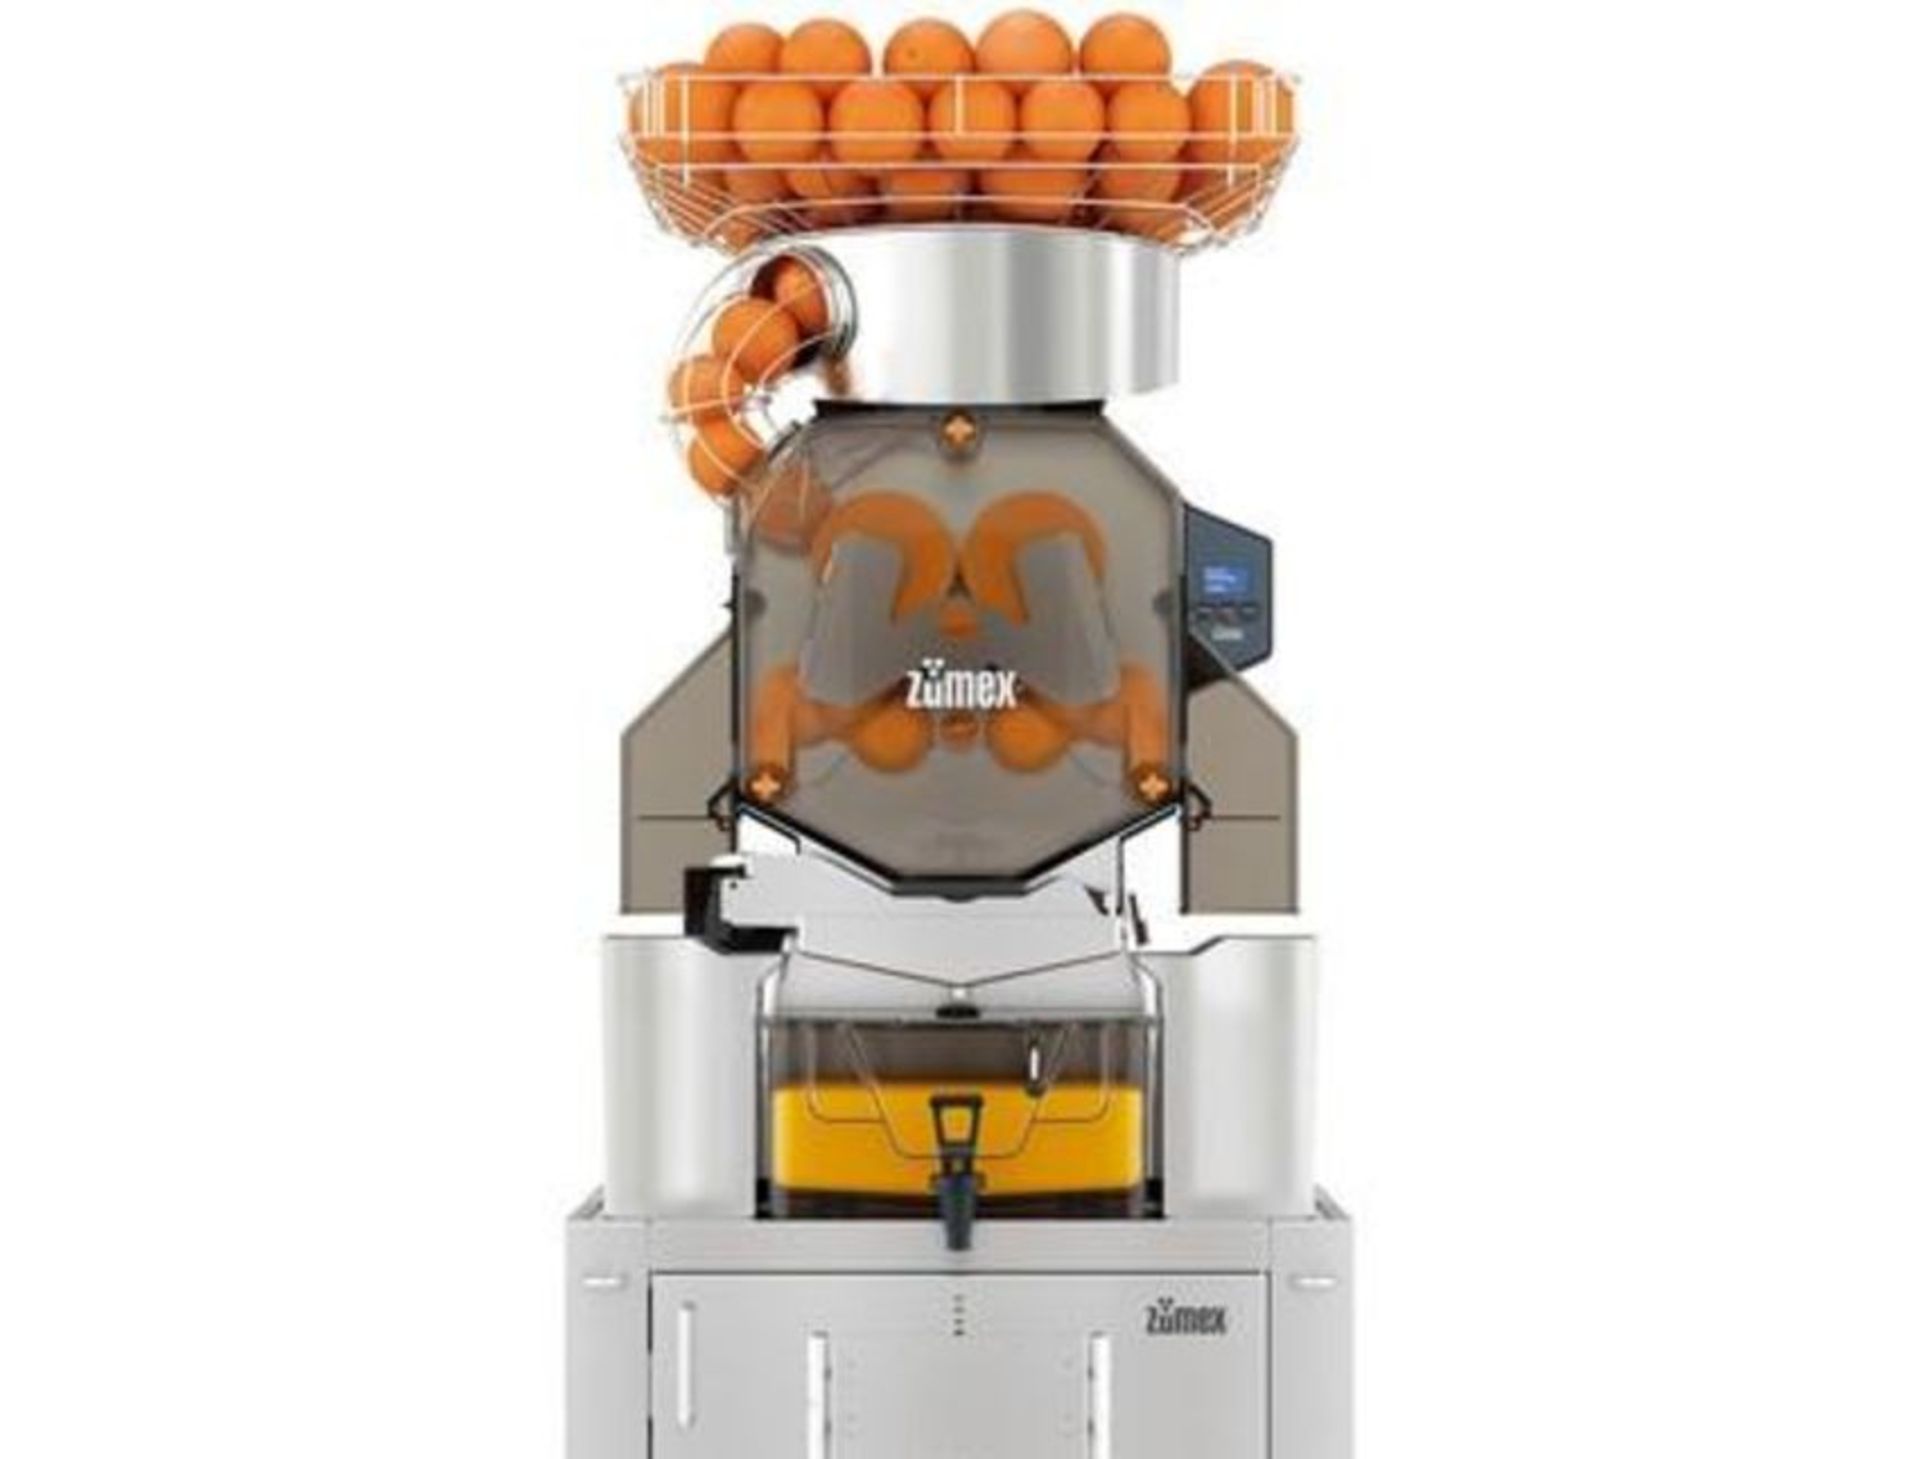 1 x Zumex Speed S +Plus Self-Service Podium Commercial Citrus Juicer - Manufactured in 2018 - - Image 9 of 20